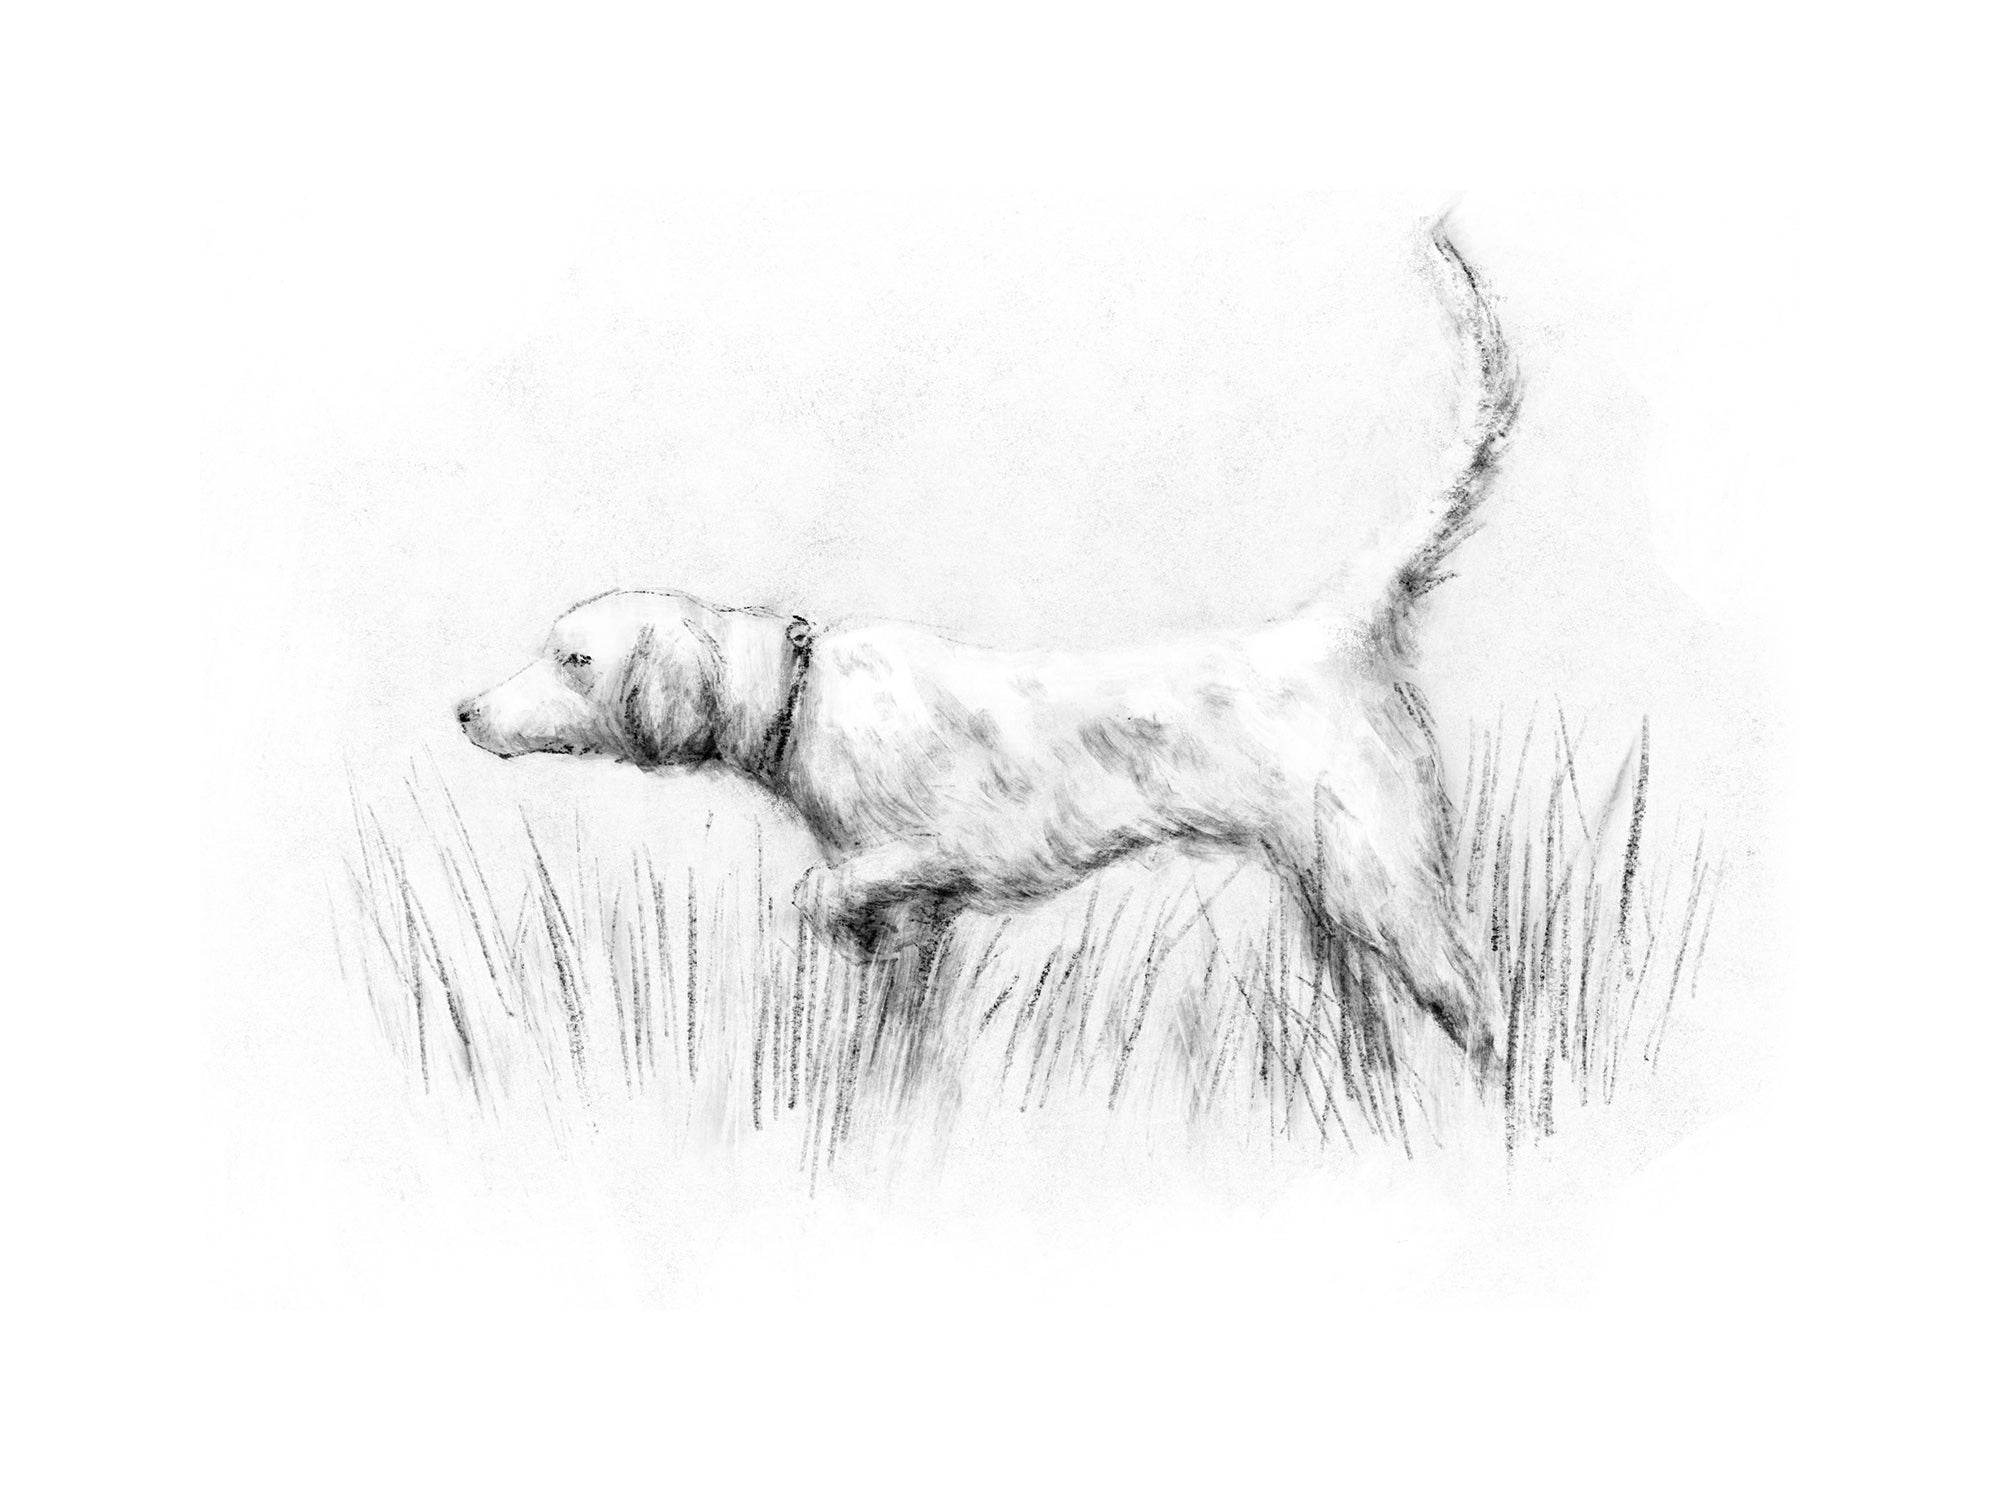 pointing dog illustration